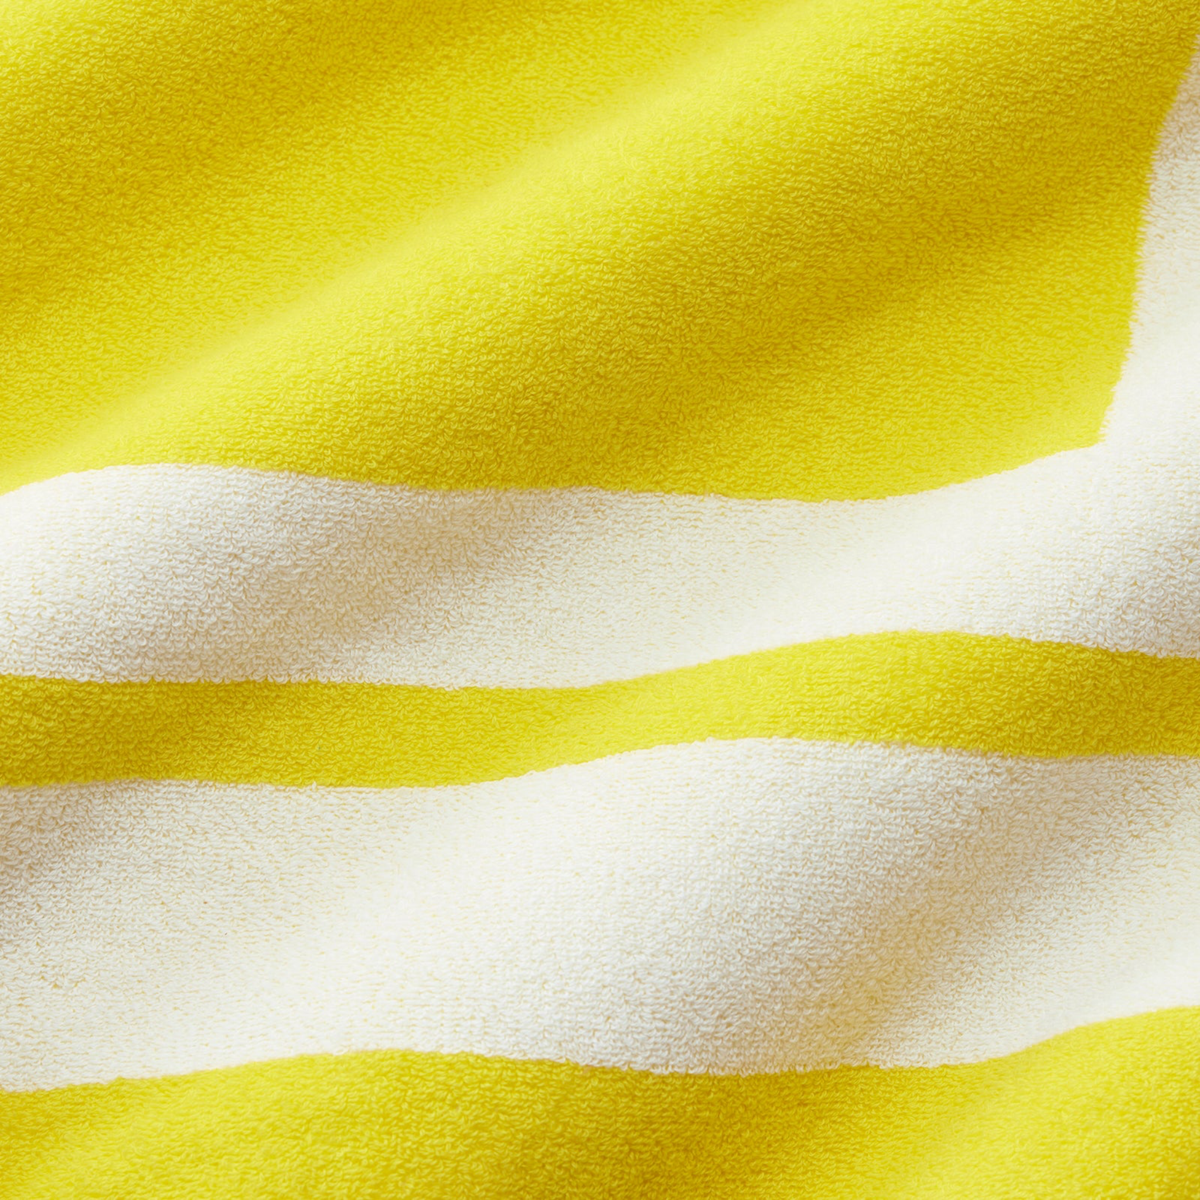 Swatch Sample of Sferra Mareta Beach Towels Lemon Color